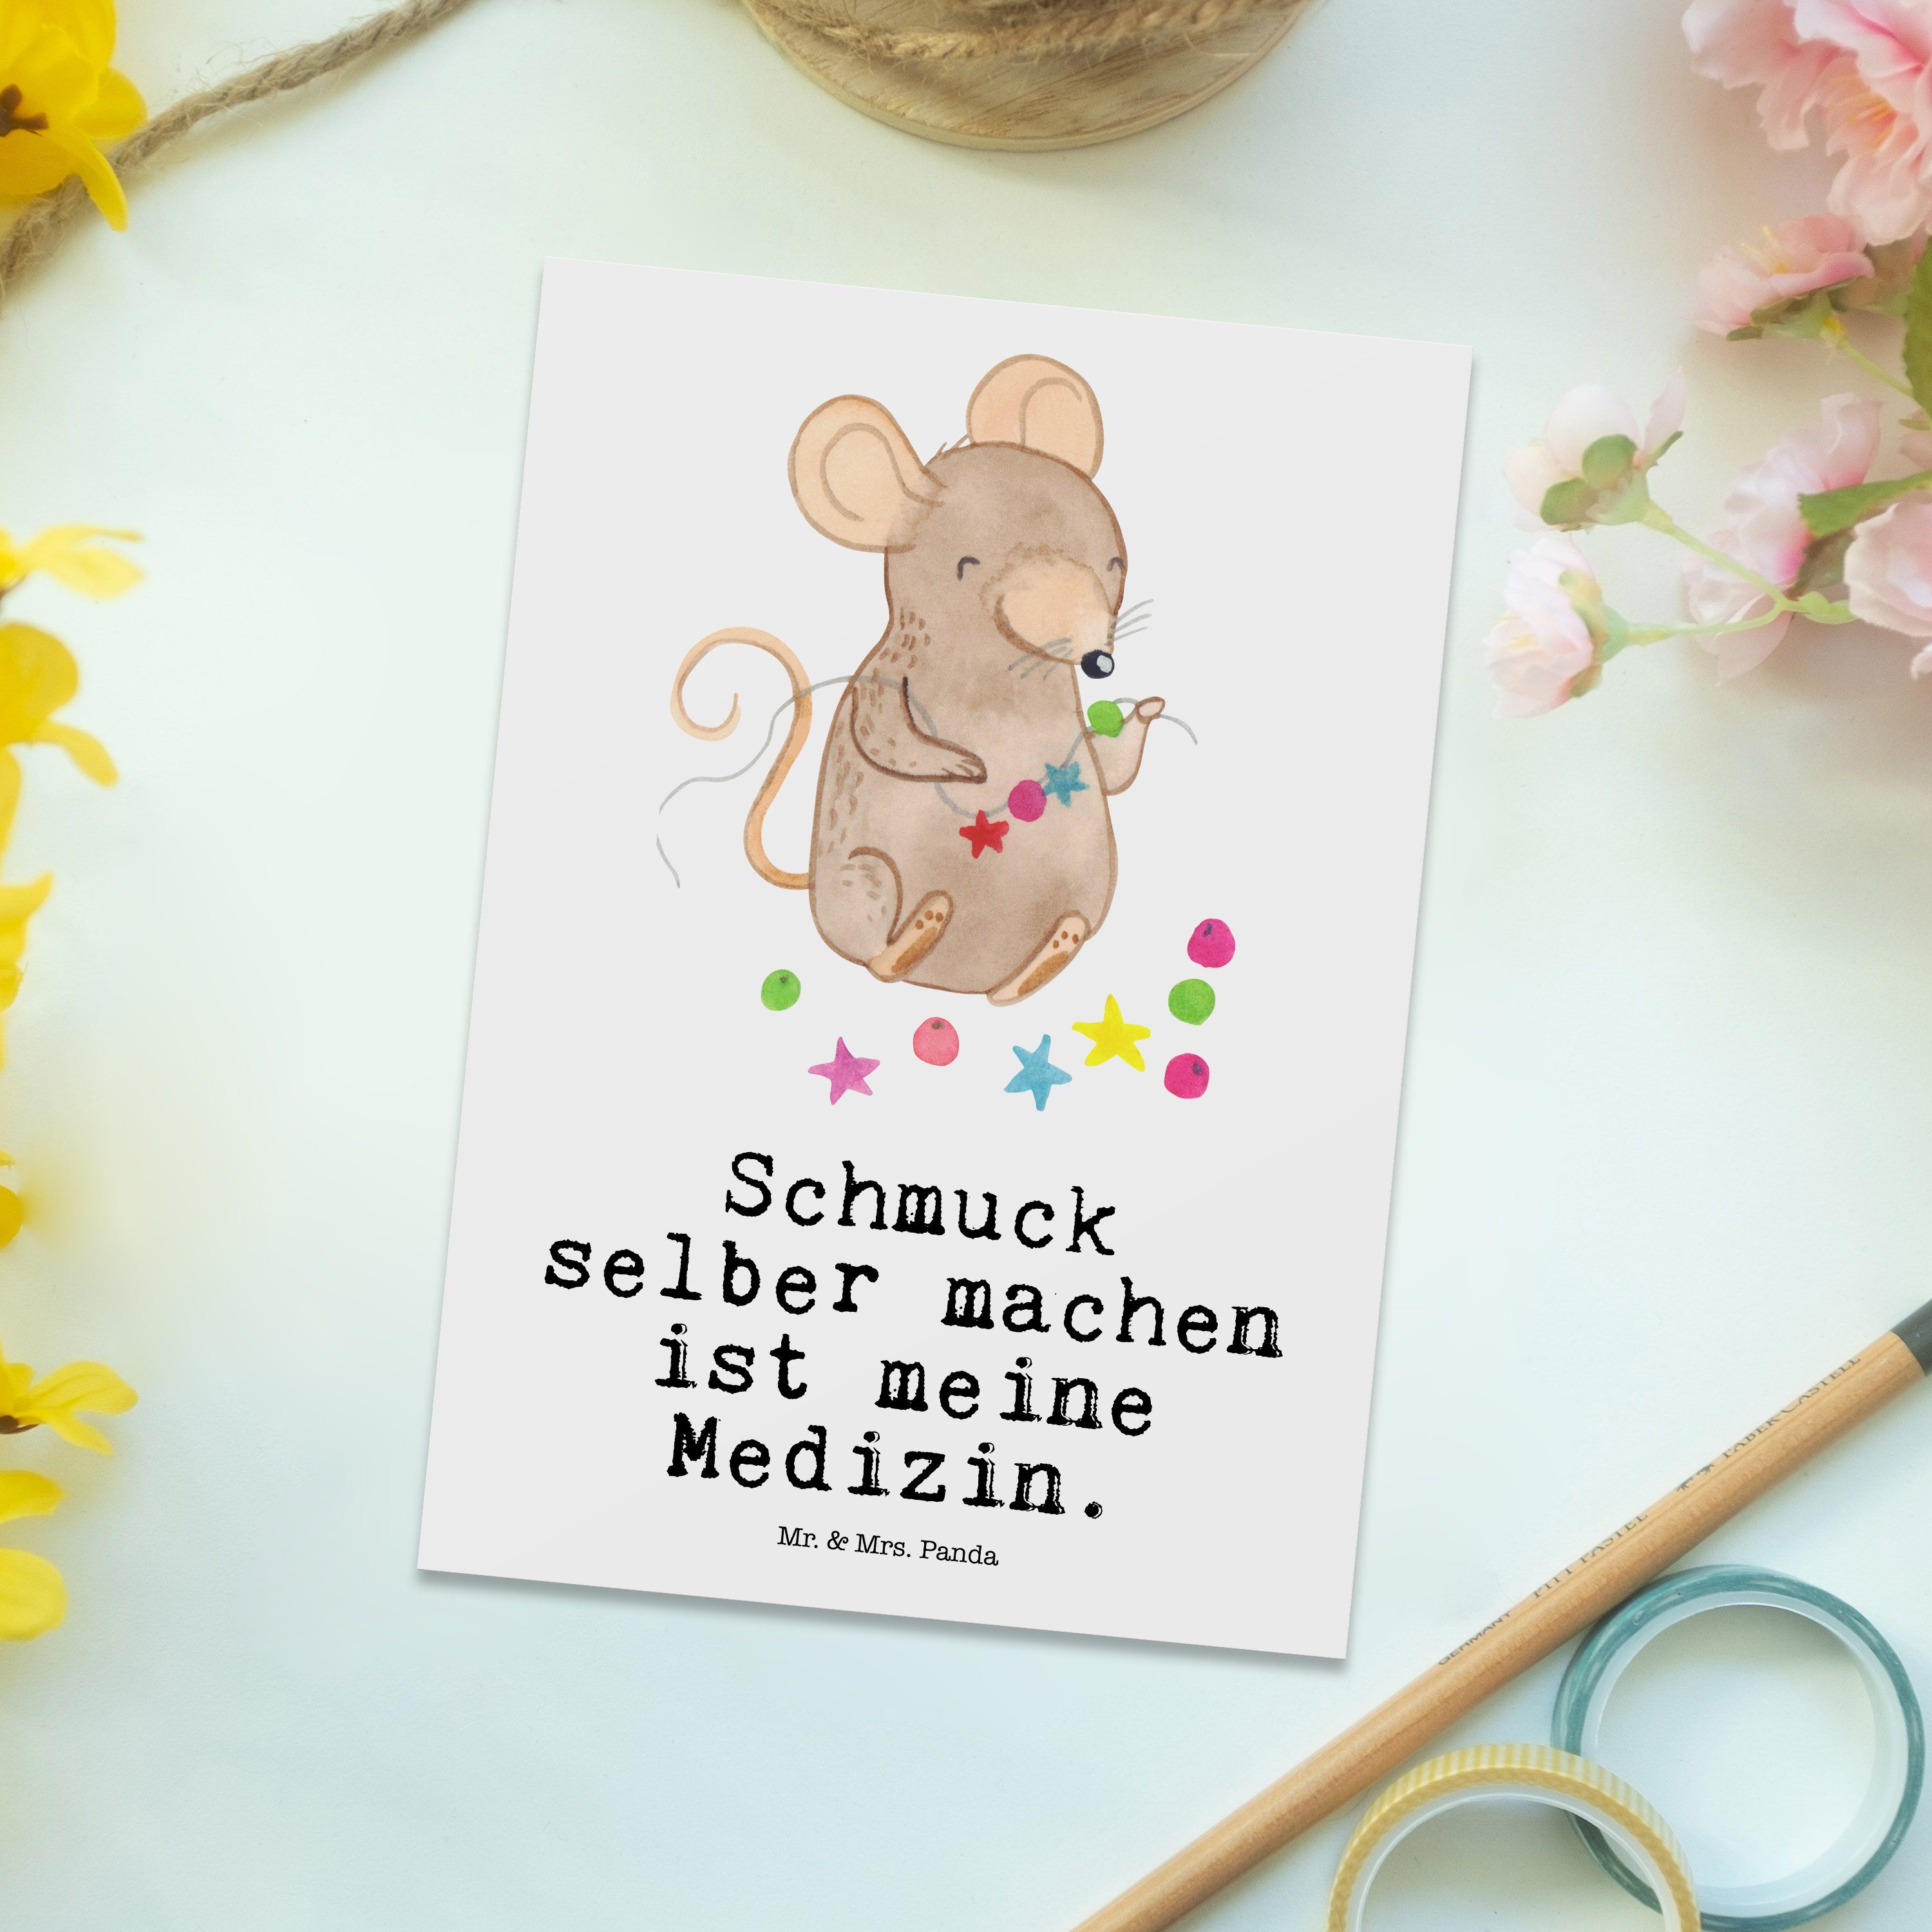 Mr. Weiß Schmuck Geschenk, - Schmuck - machen Mrs. selber Medizin Danke, & Postkarte Maus Panda